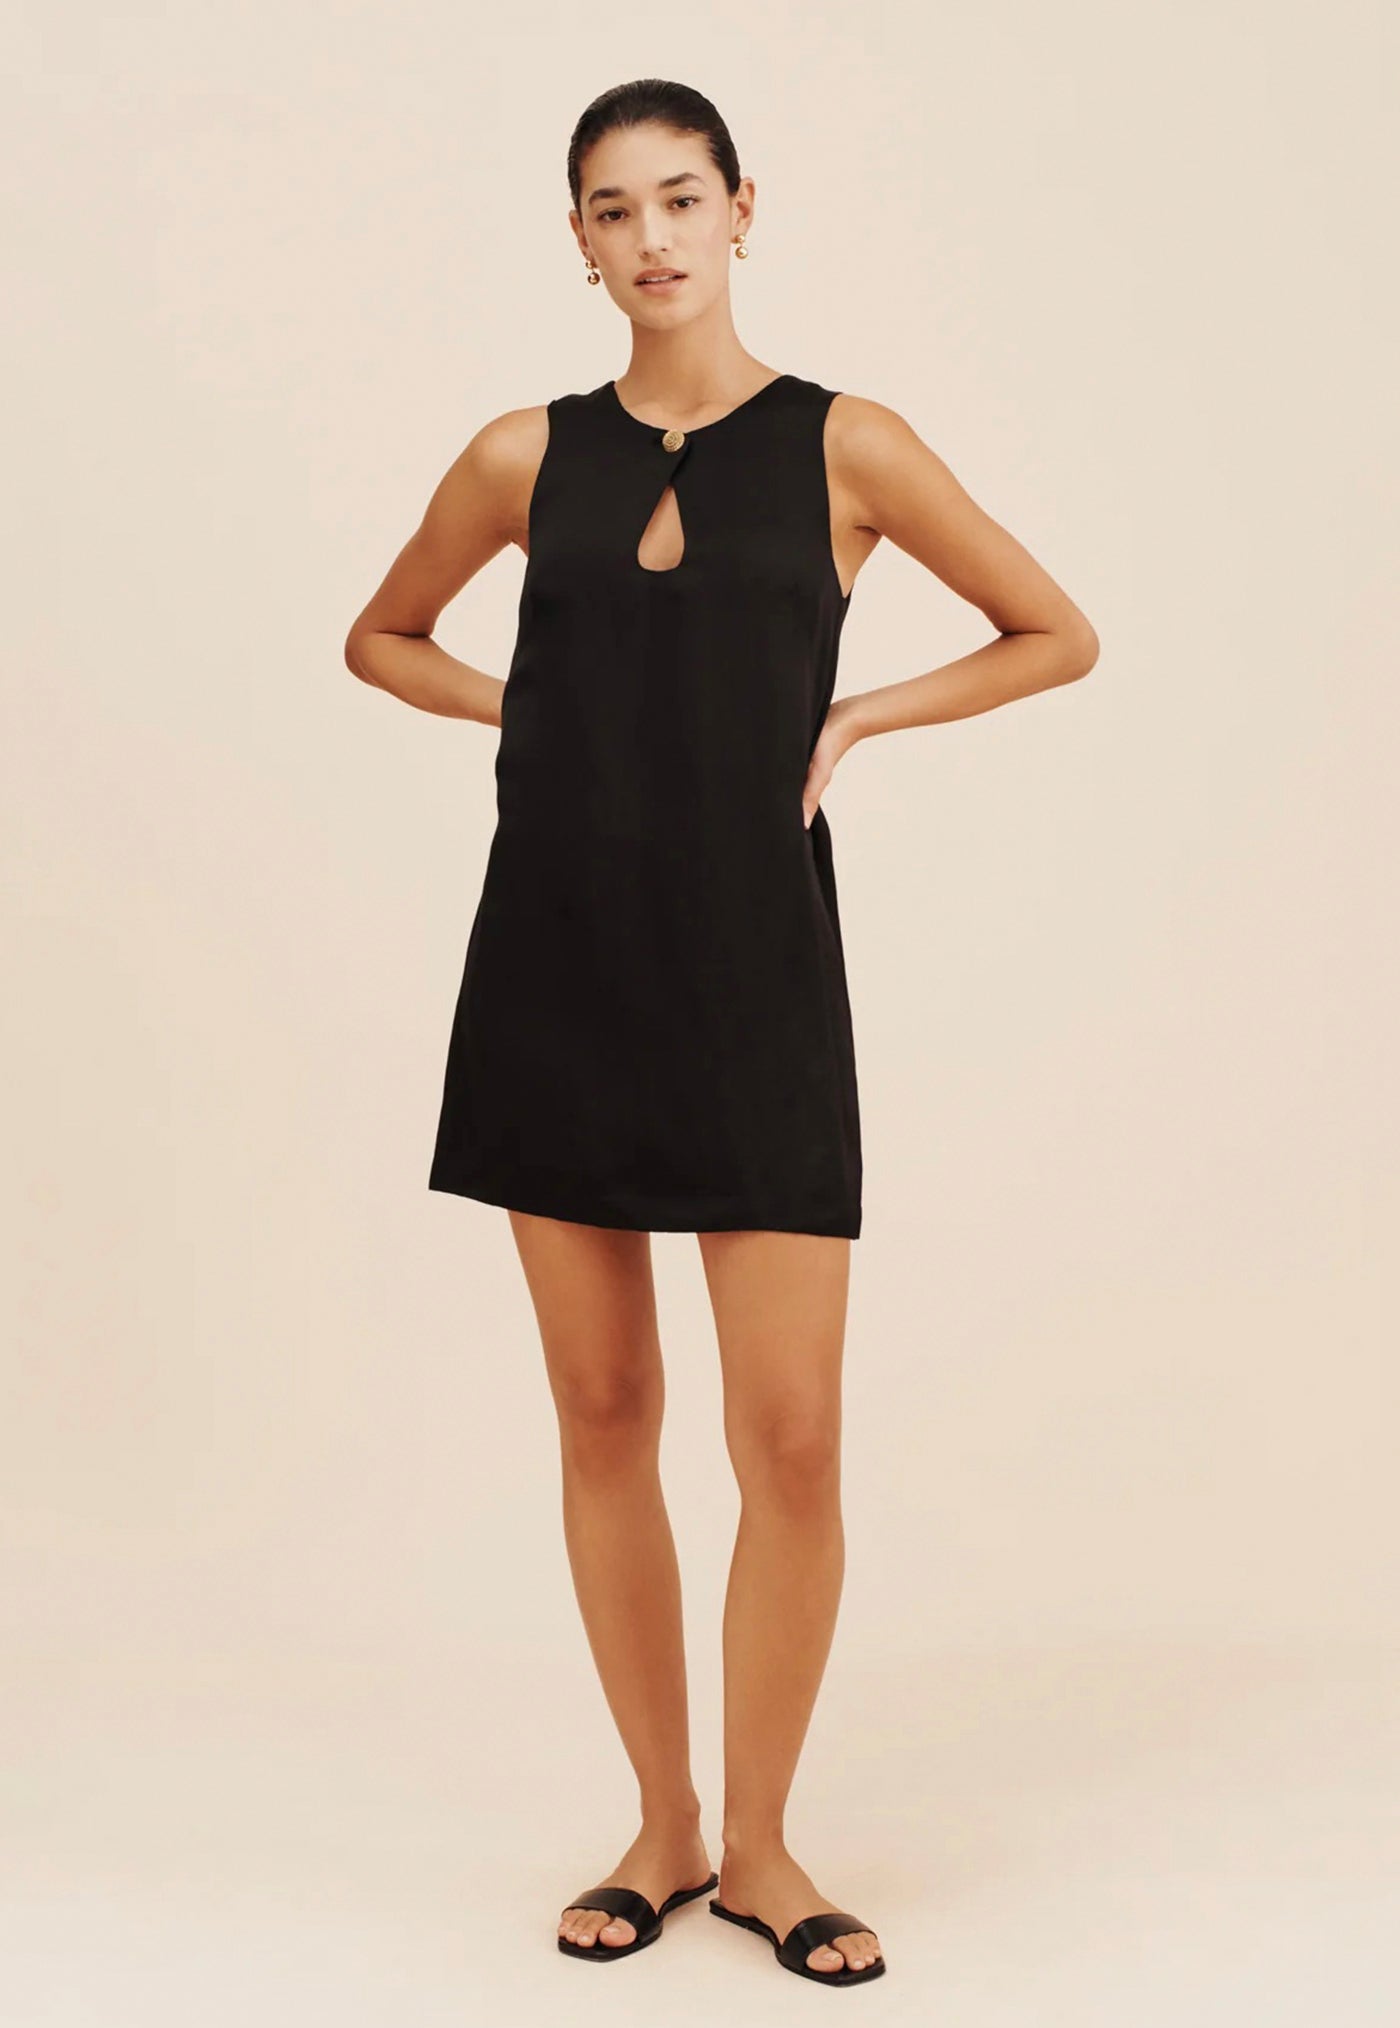 Gigi Mini Dress - Black sold by Angel Divine